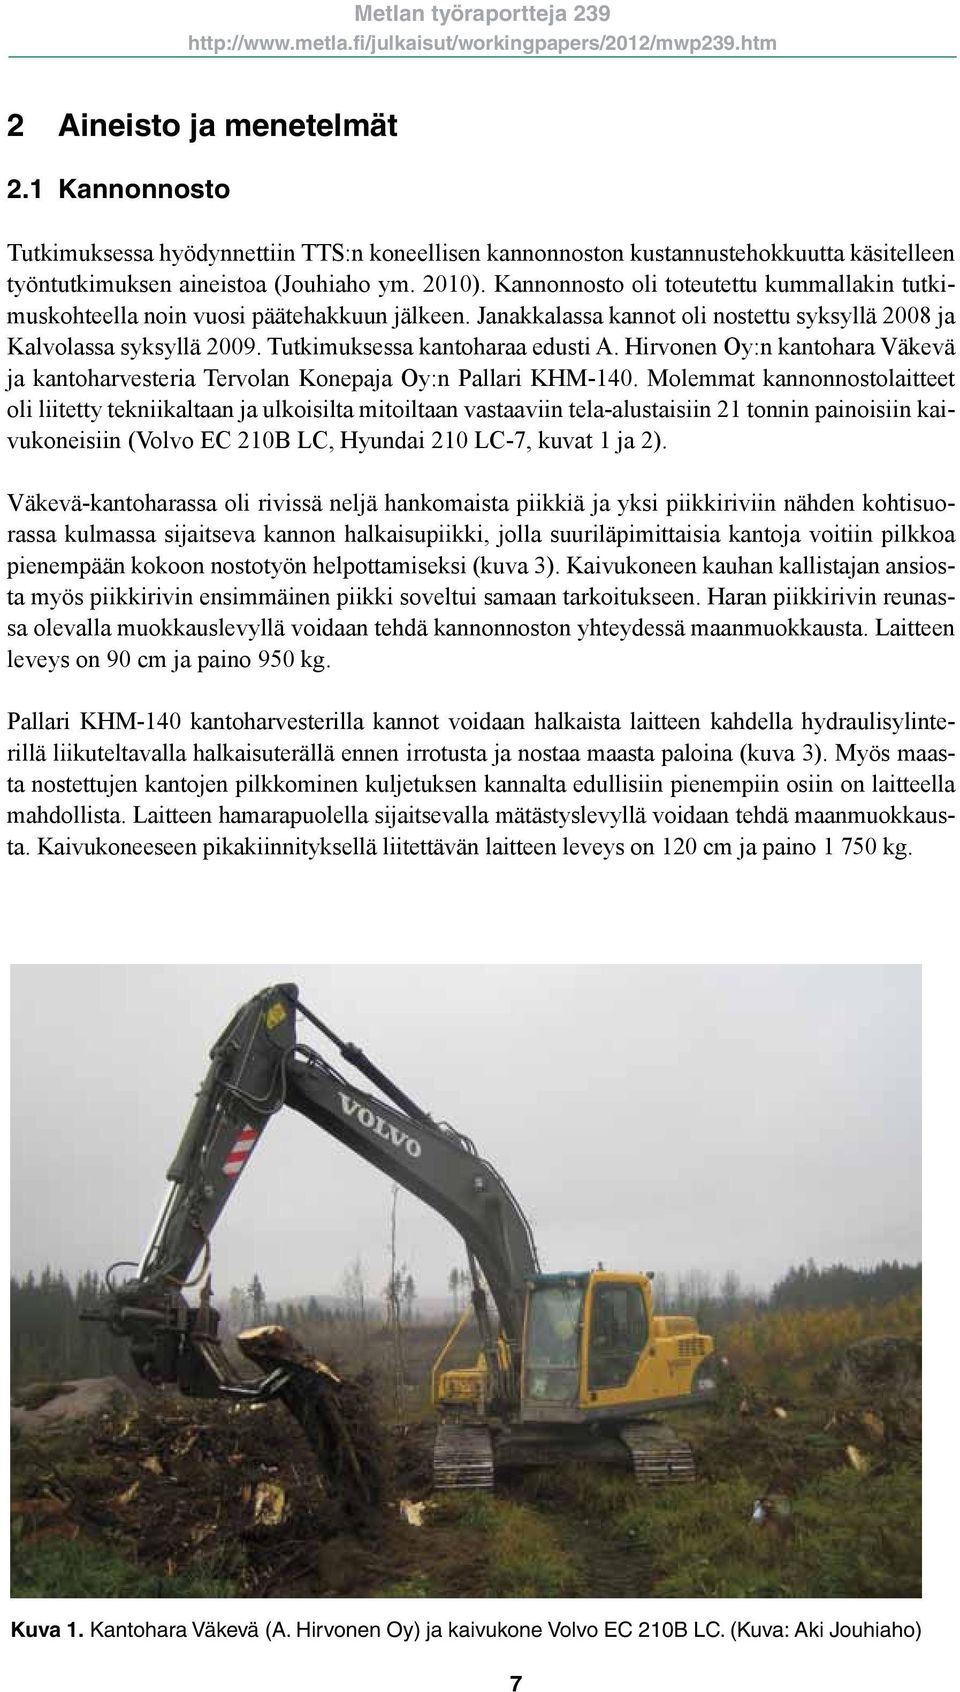 Hirvonen Oy:n kantohara Väkevä ja kantoharvesteria Tervolan Konepaja Oy:n Pallari KHM-140.